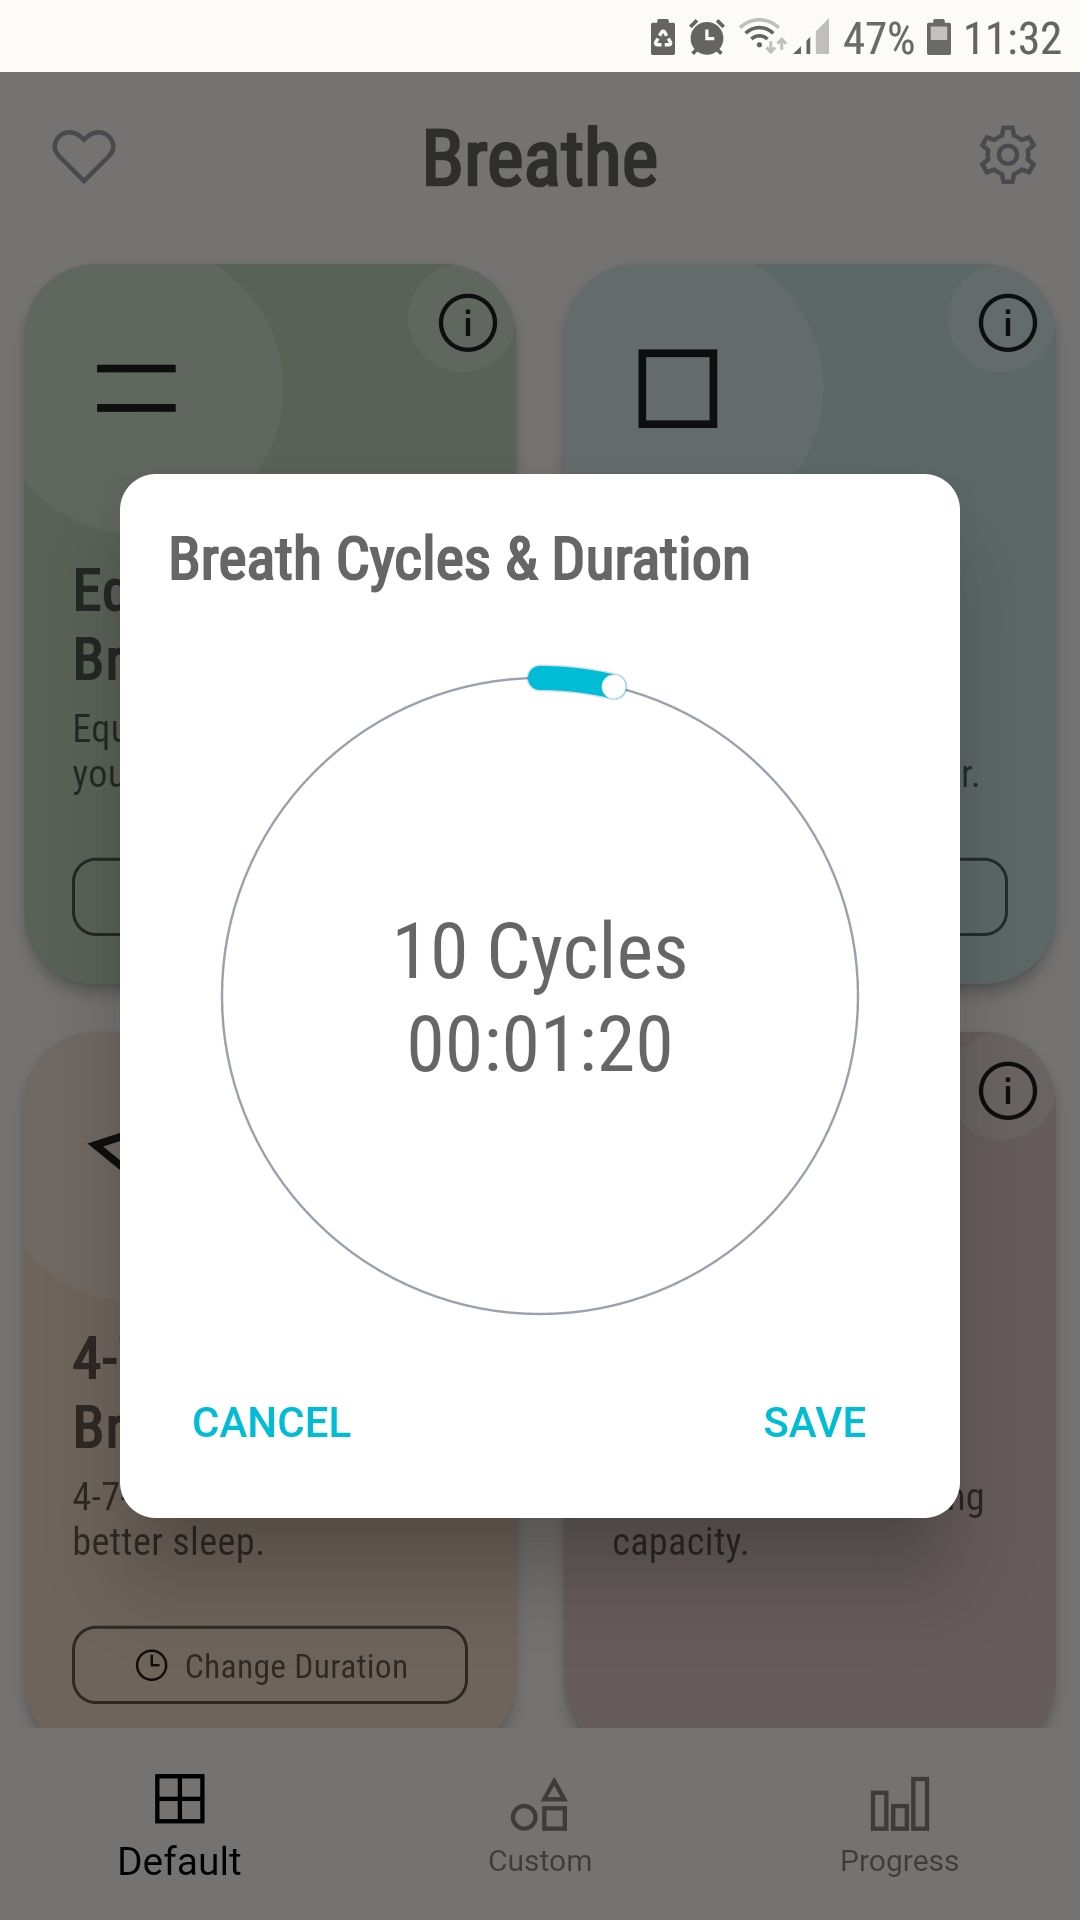 Breathe breathwork mobile app cycles